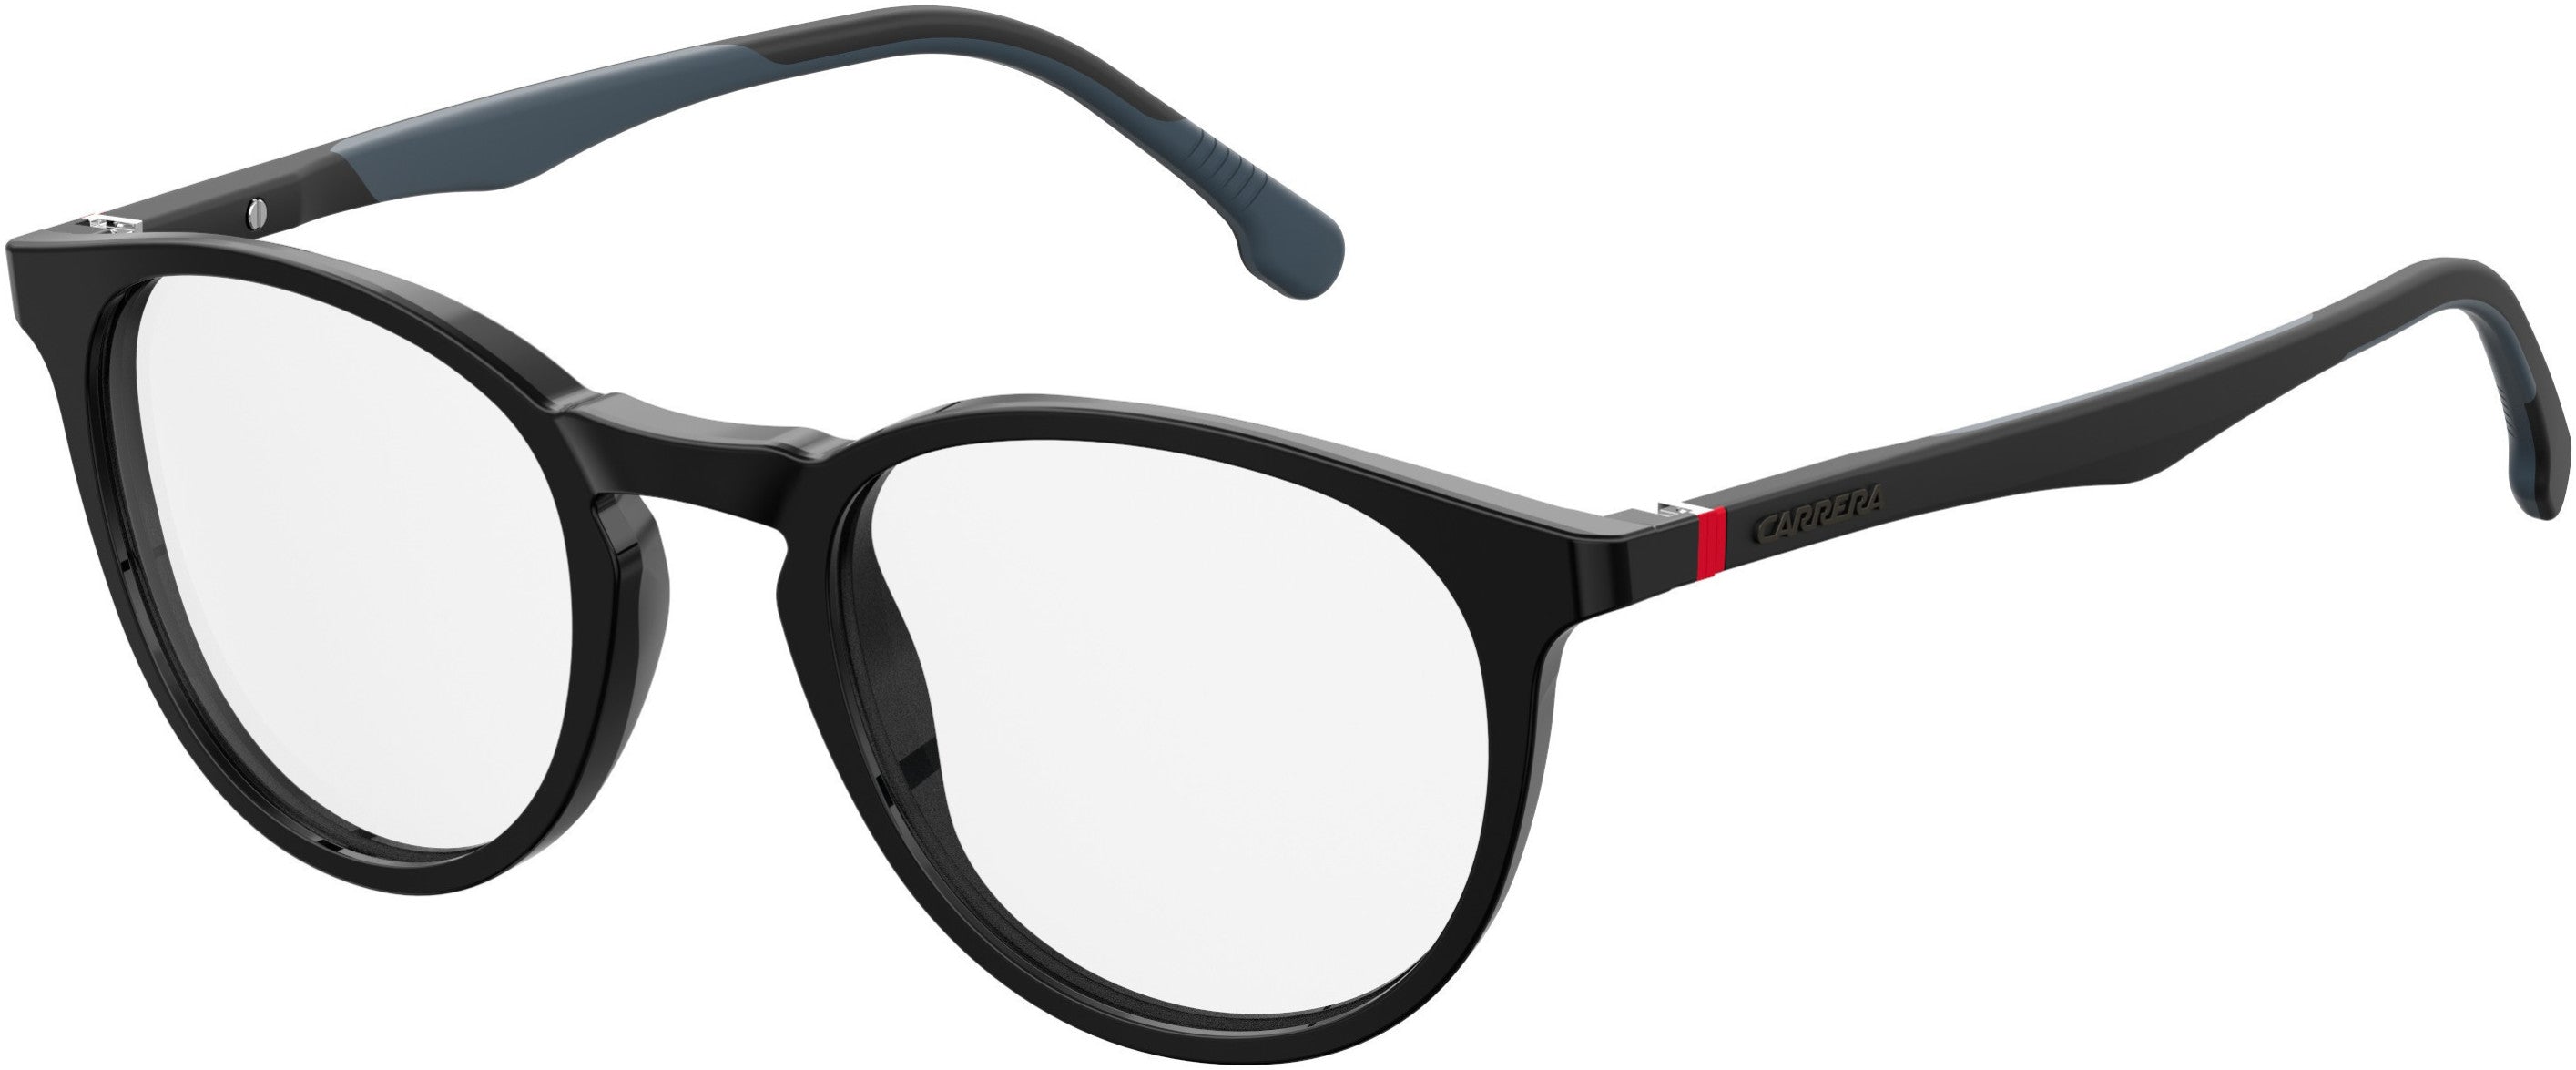  Carrera 8829/V Oval Modified Eyeglasses 0807-0807  Black (00 Demo Lens)